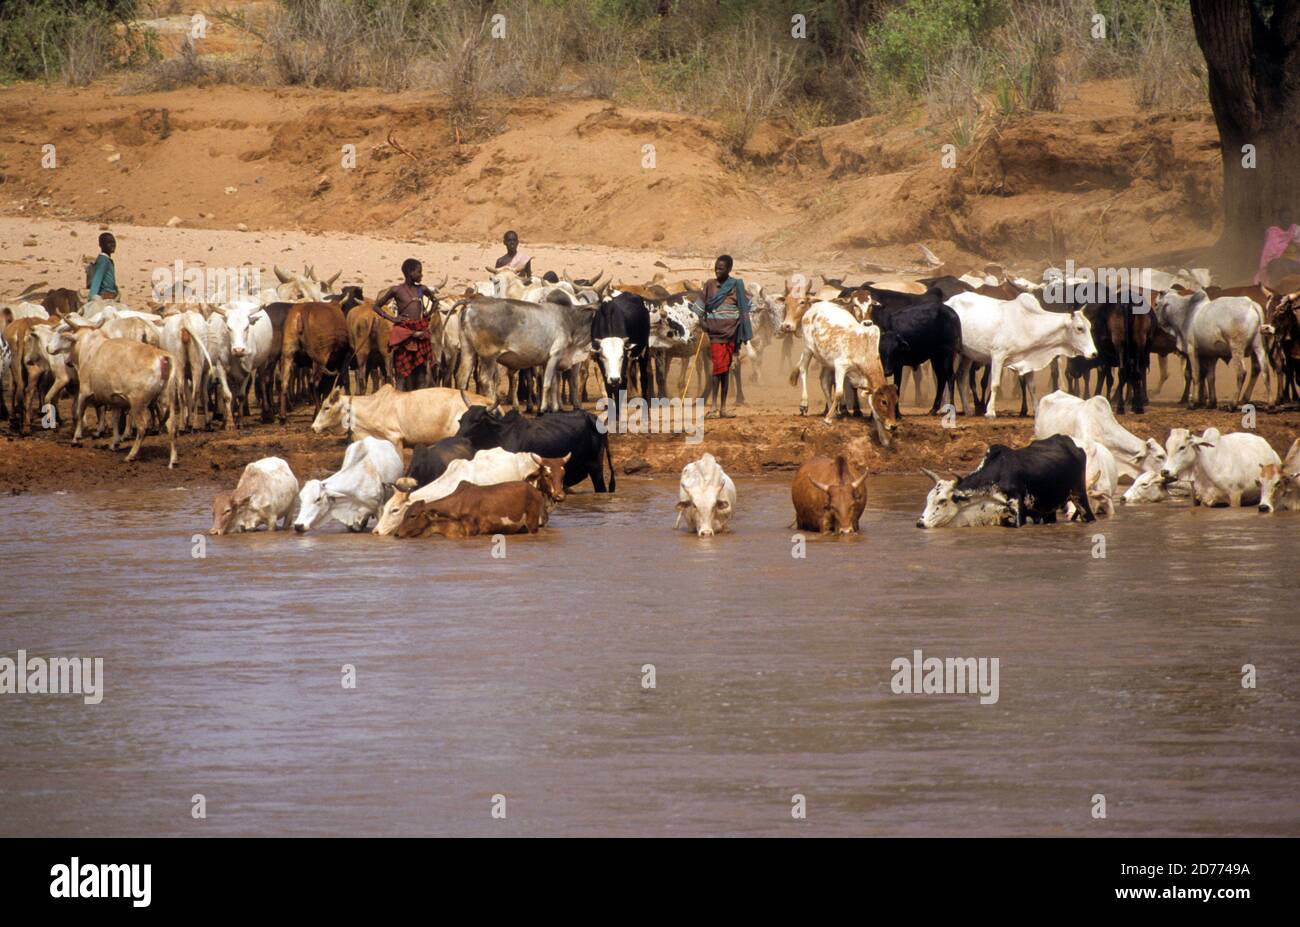 Troupeau de bovins de la tribu Samburu. Les Samburu sont un peuple nilotique du centre-nord du Kenya. Samburu sont des pasteurs semi-nomades qui troupeau principalement ca Banque D'Images